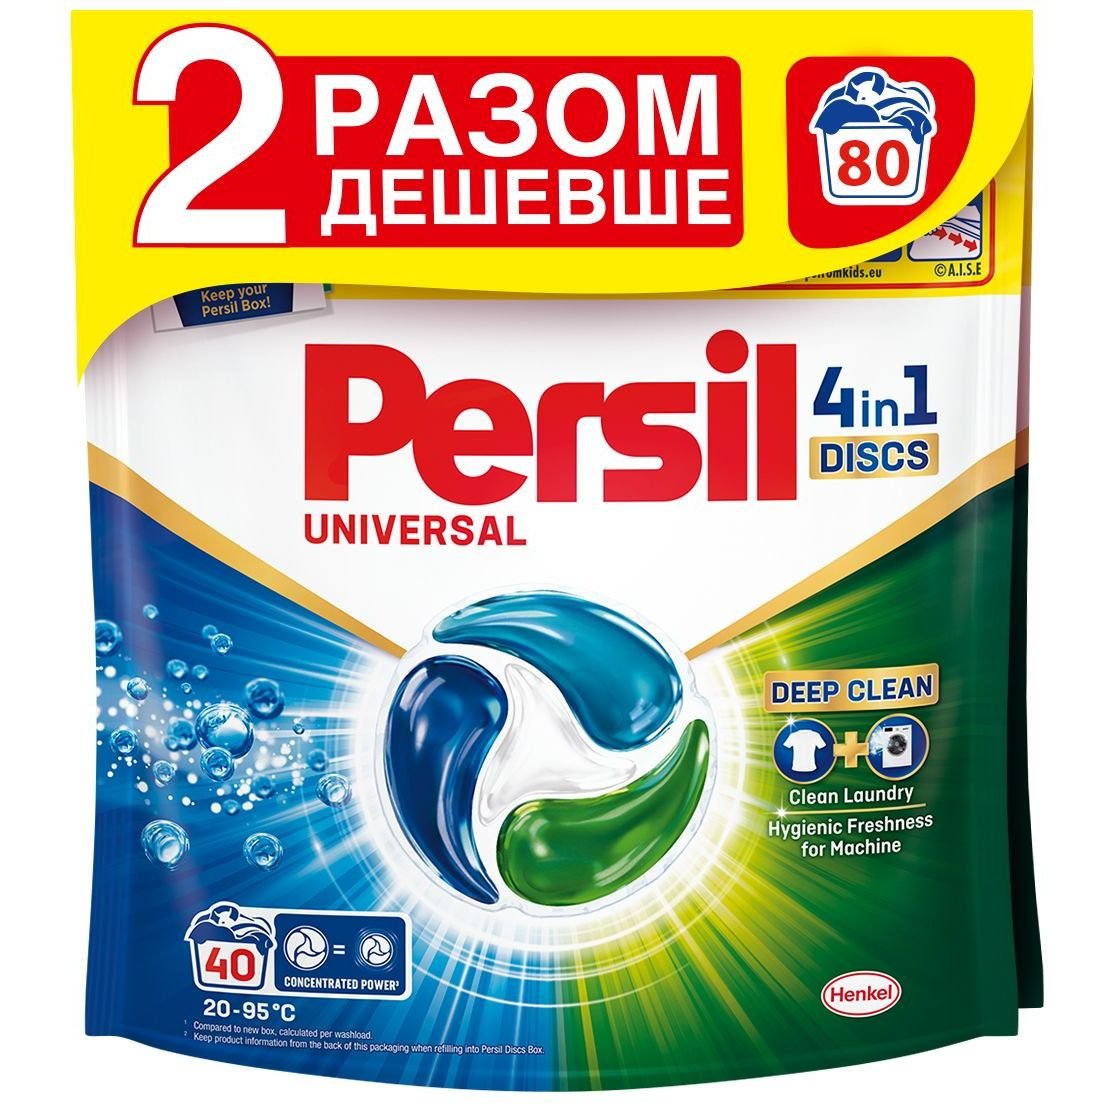 Диски для стирки Persil Deep Clean Universal 4 in 1 Discs 80 шт. (2 х 40 шт.) - фото 1